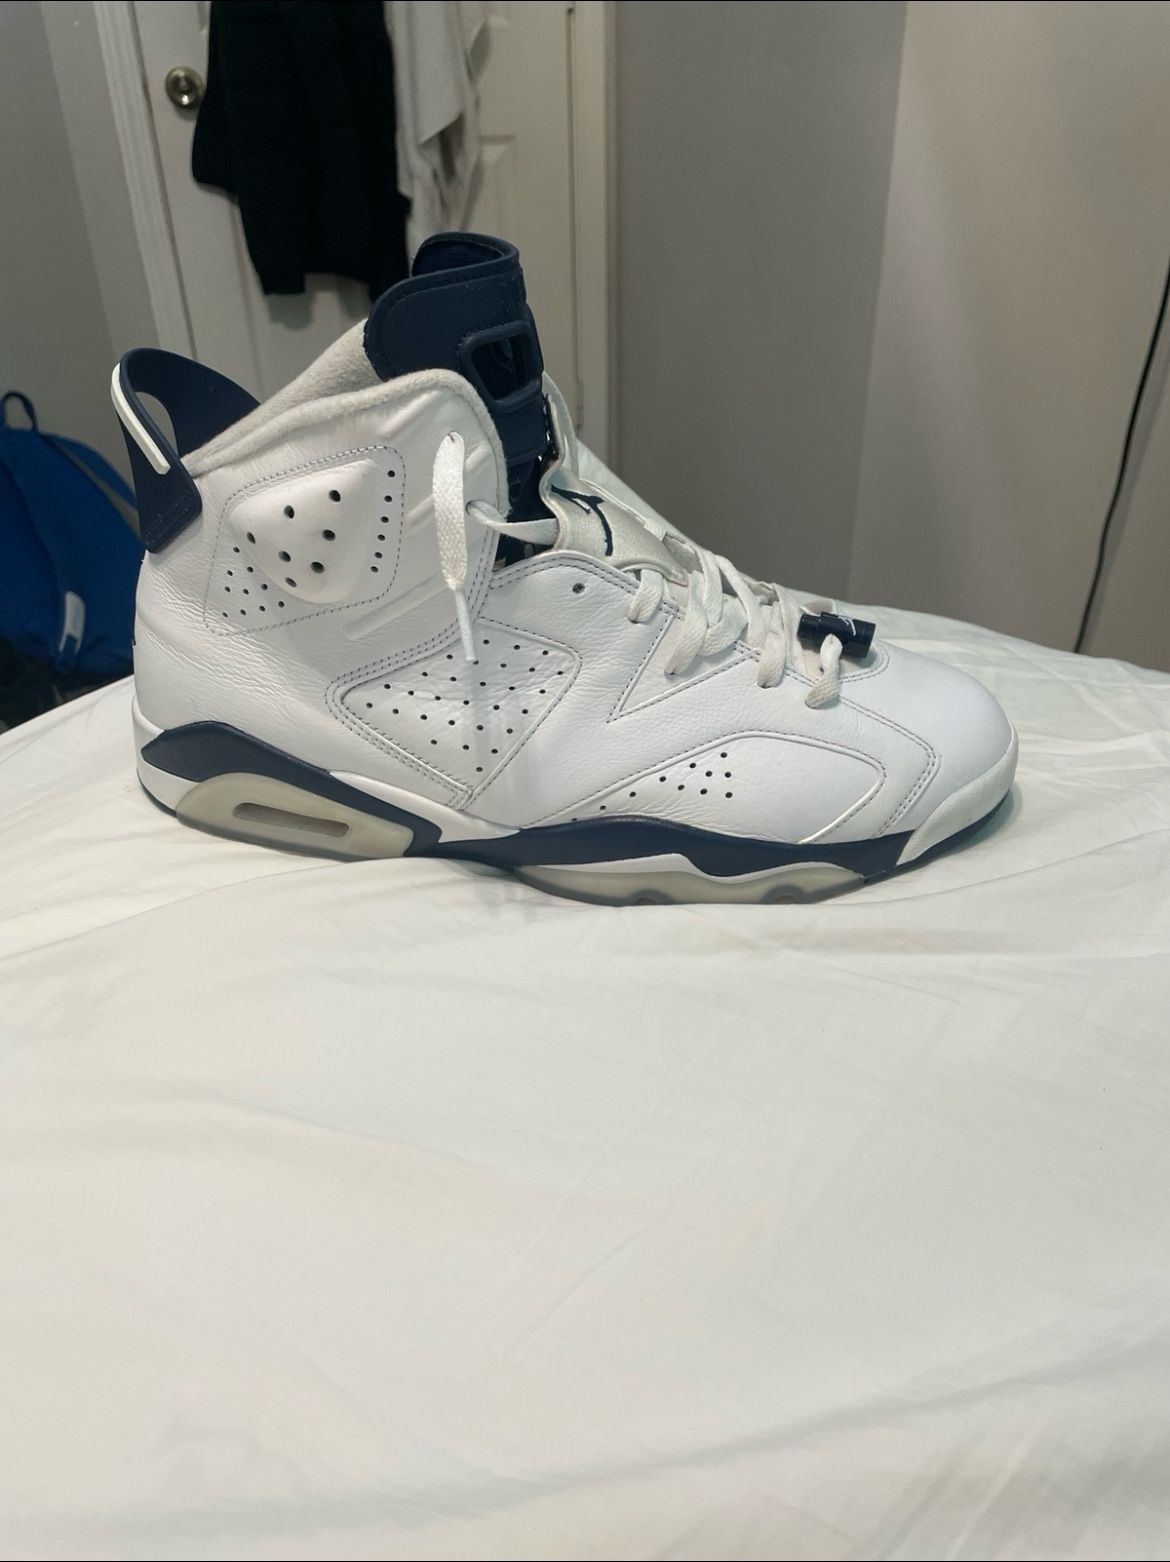 Nike Air Jordan 6 Retro Shoes in White/Midnight Navy